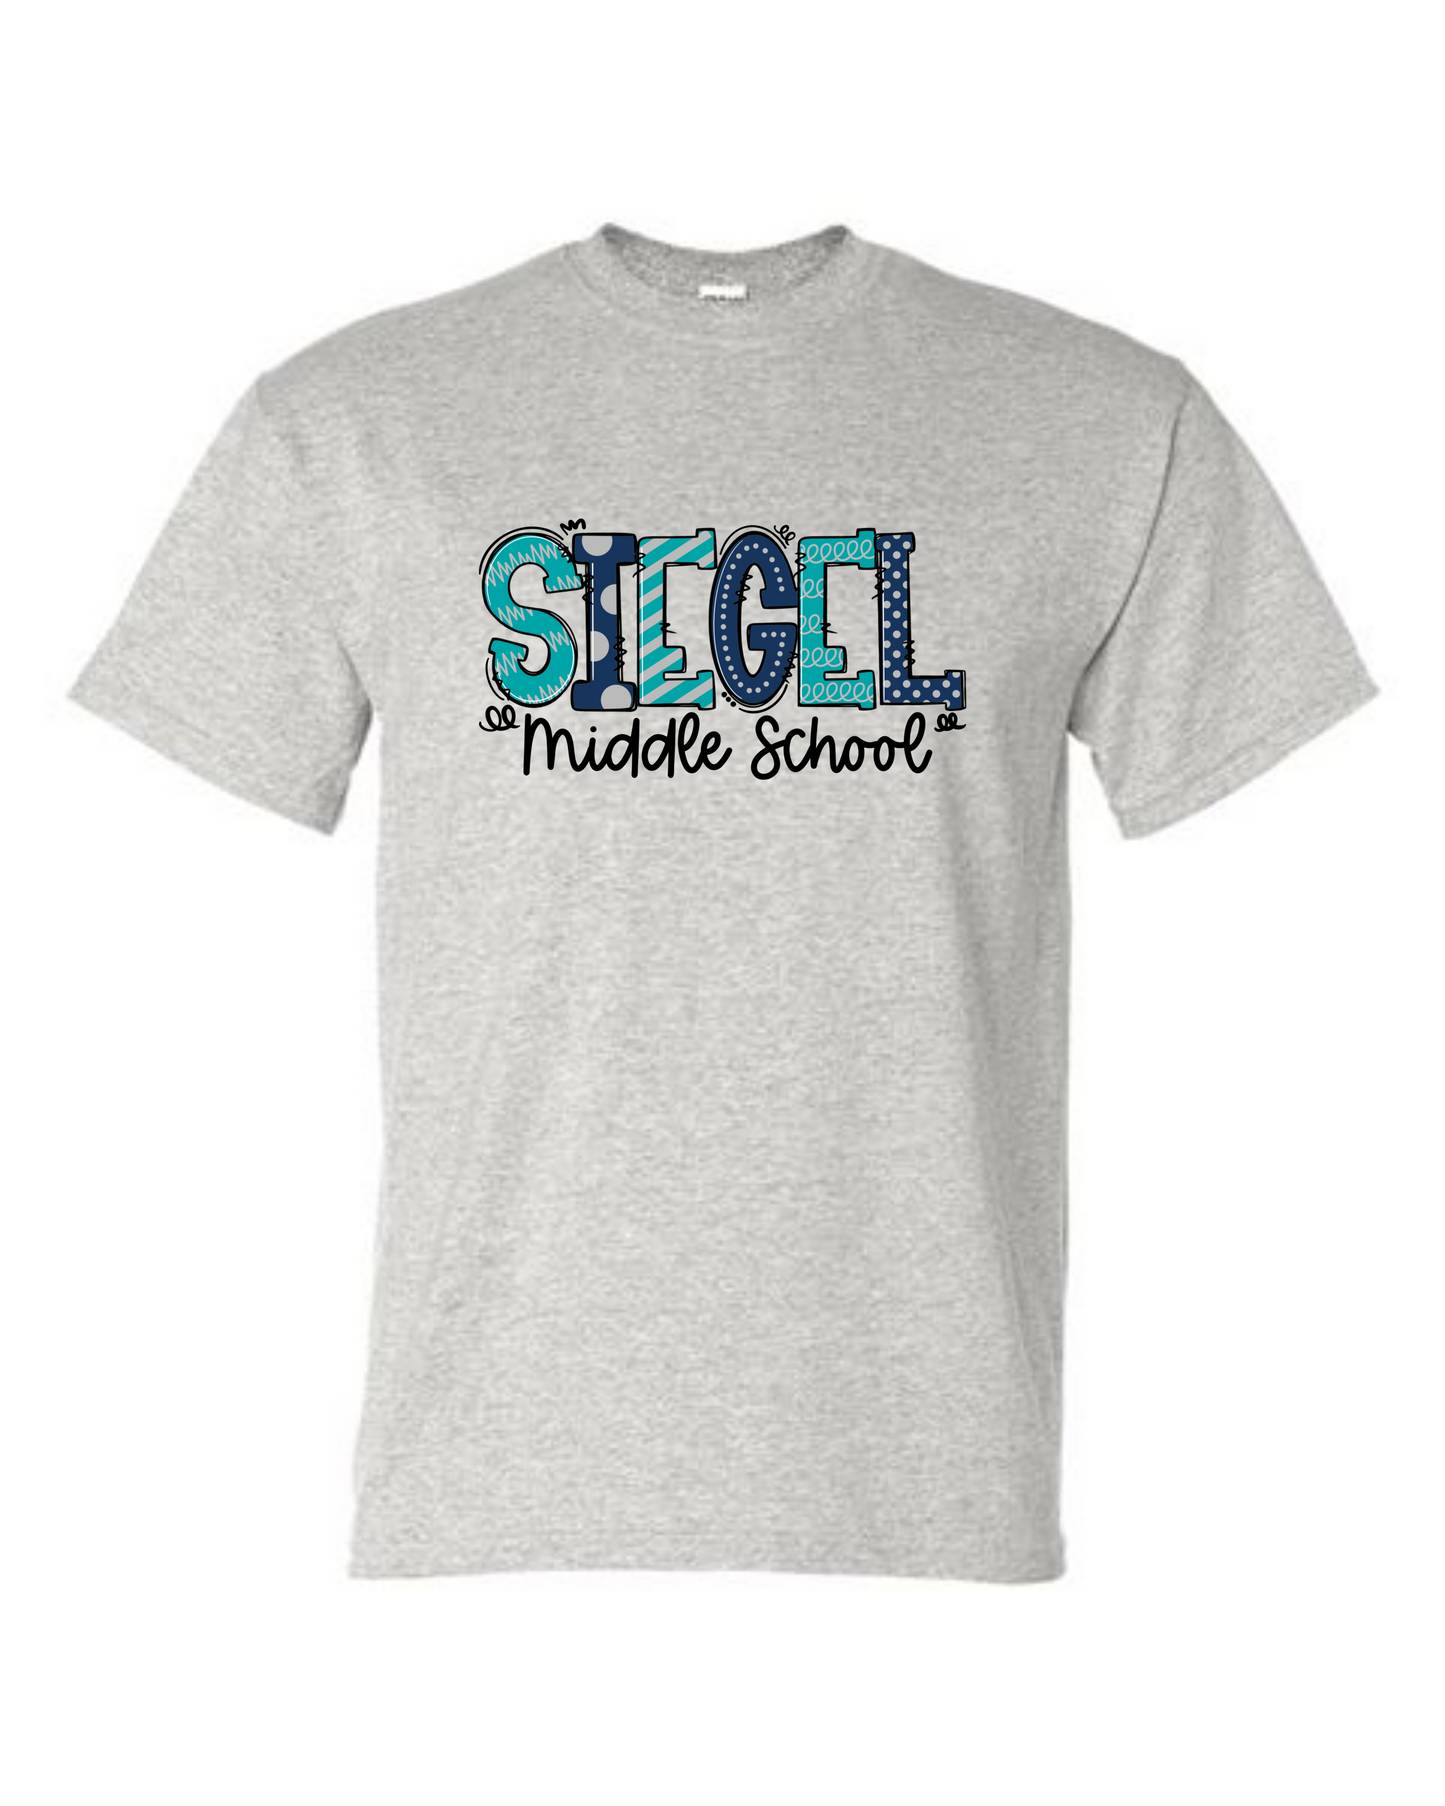 Siegel Middle School Doodle Design Tshirt